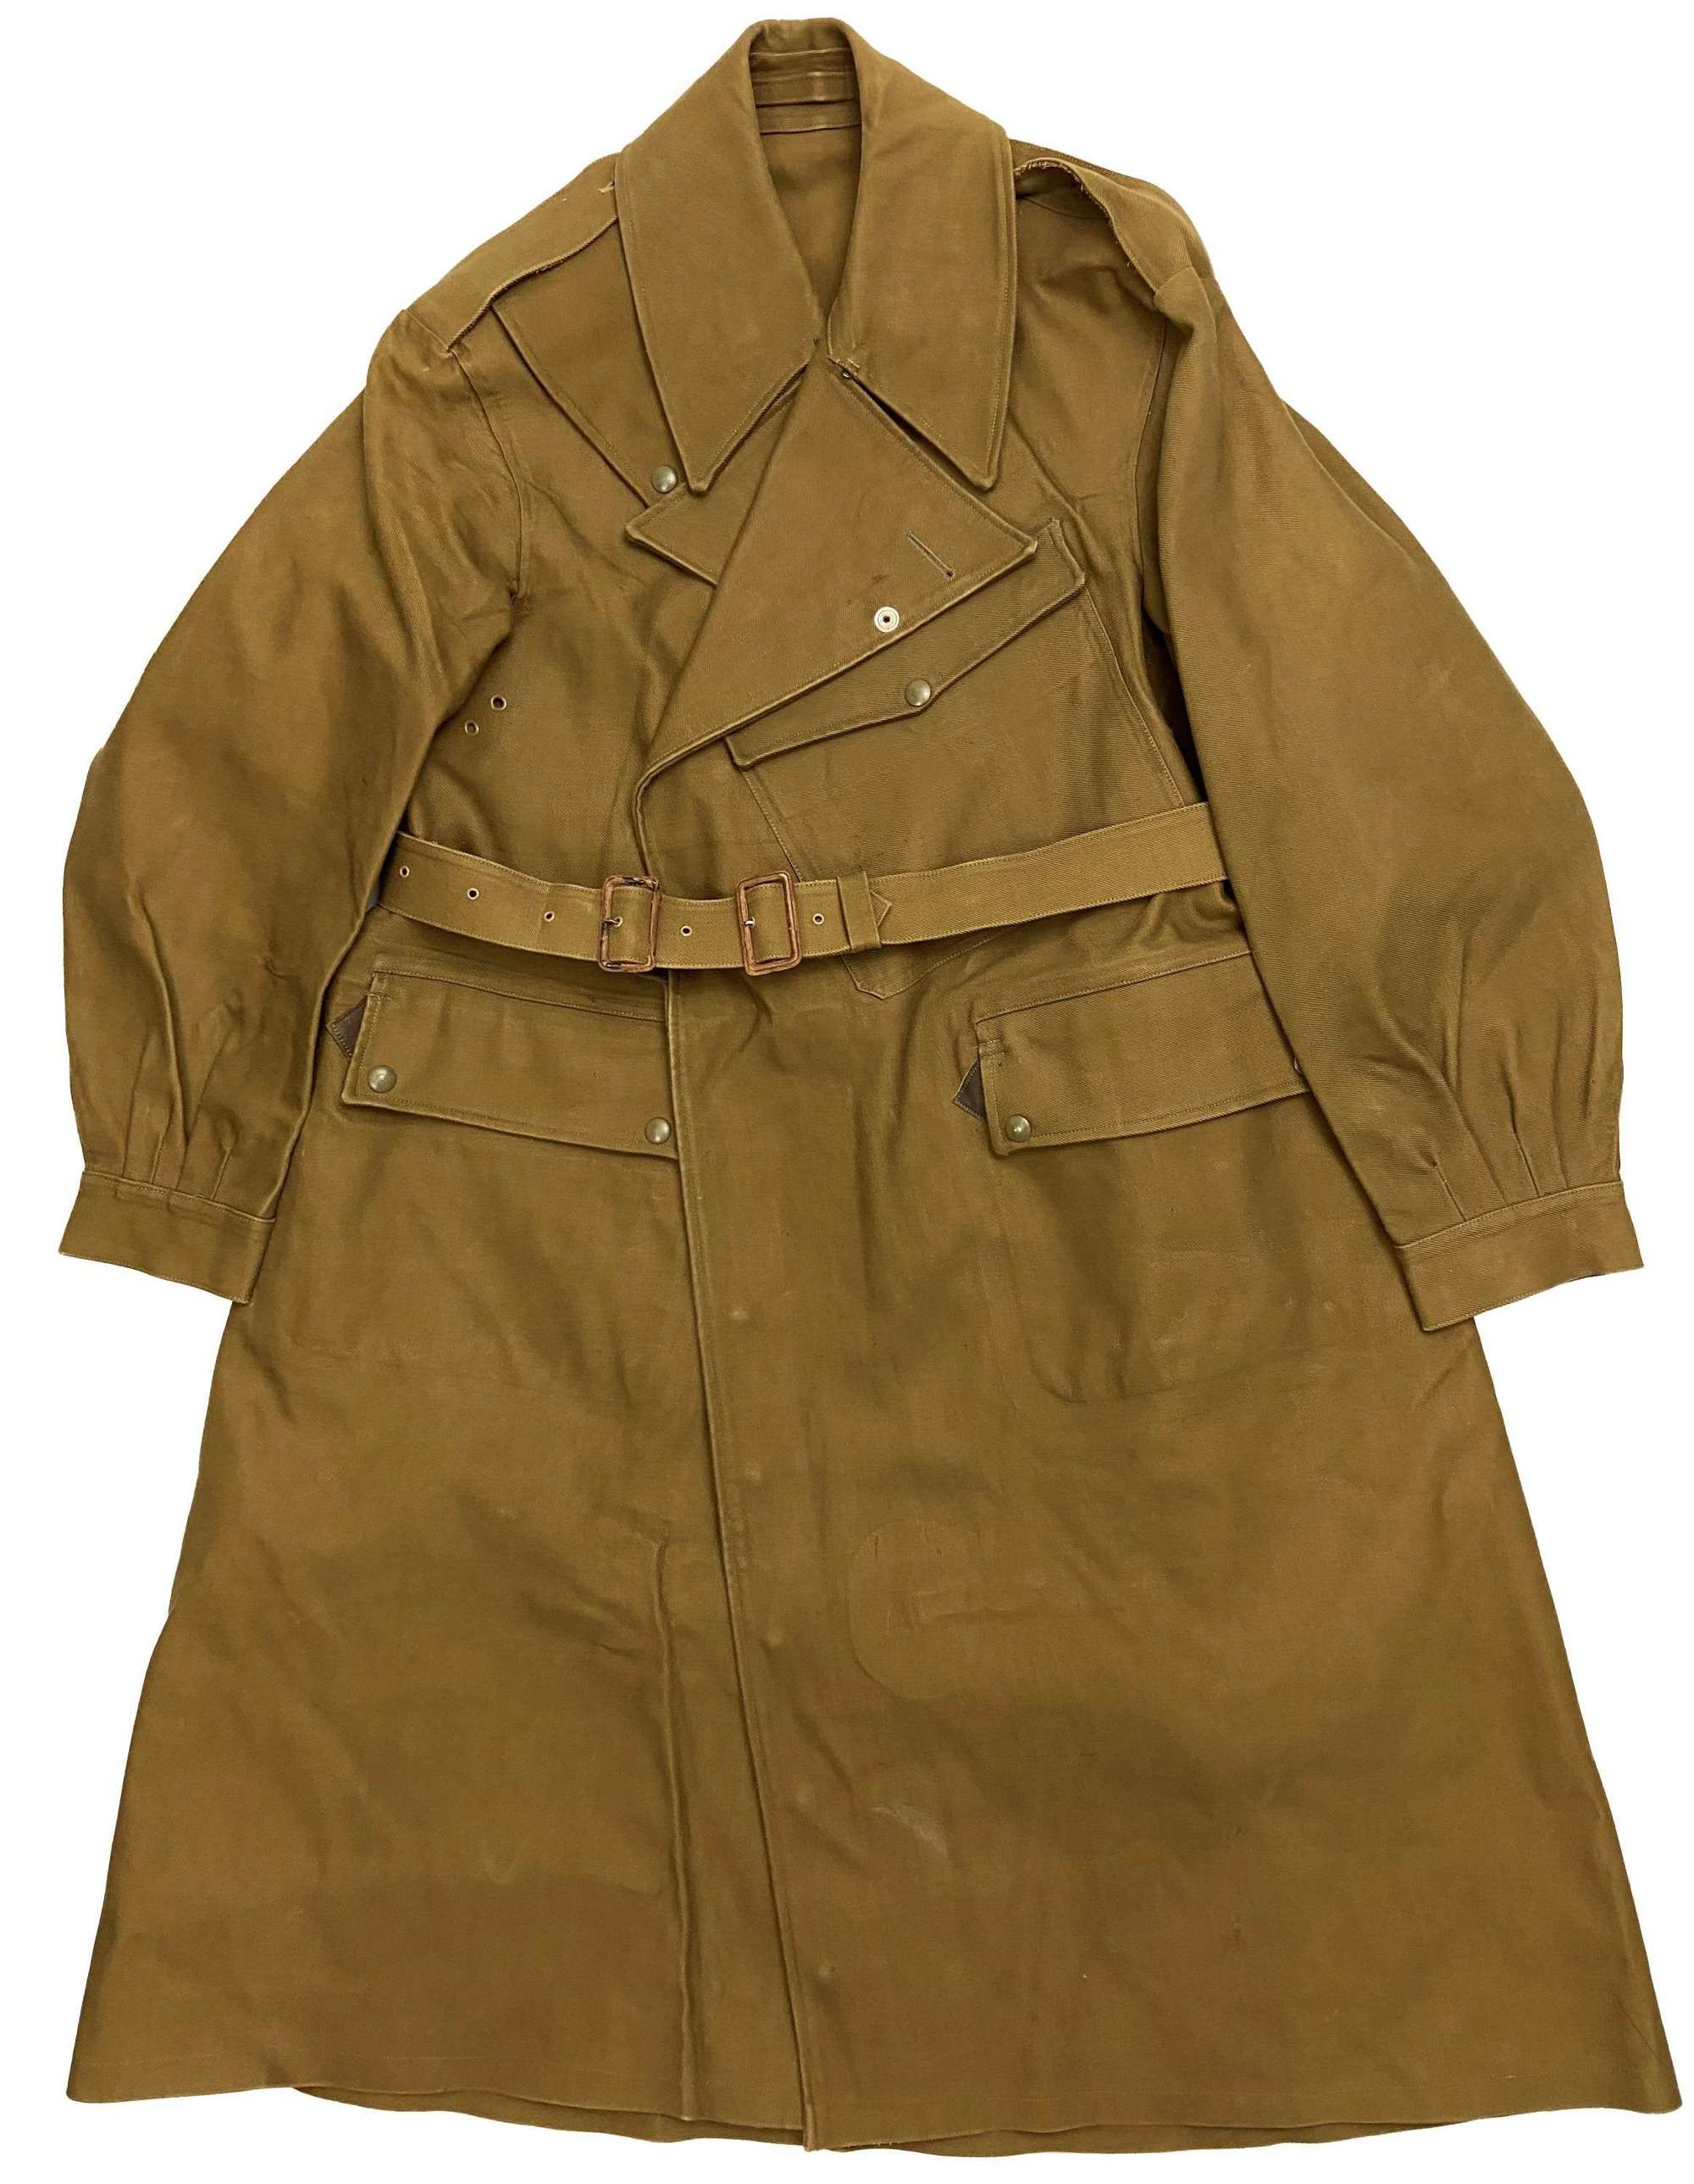 Original 1942 Dated British Army Dispatch Riders Coat - Size 8